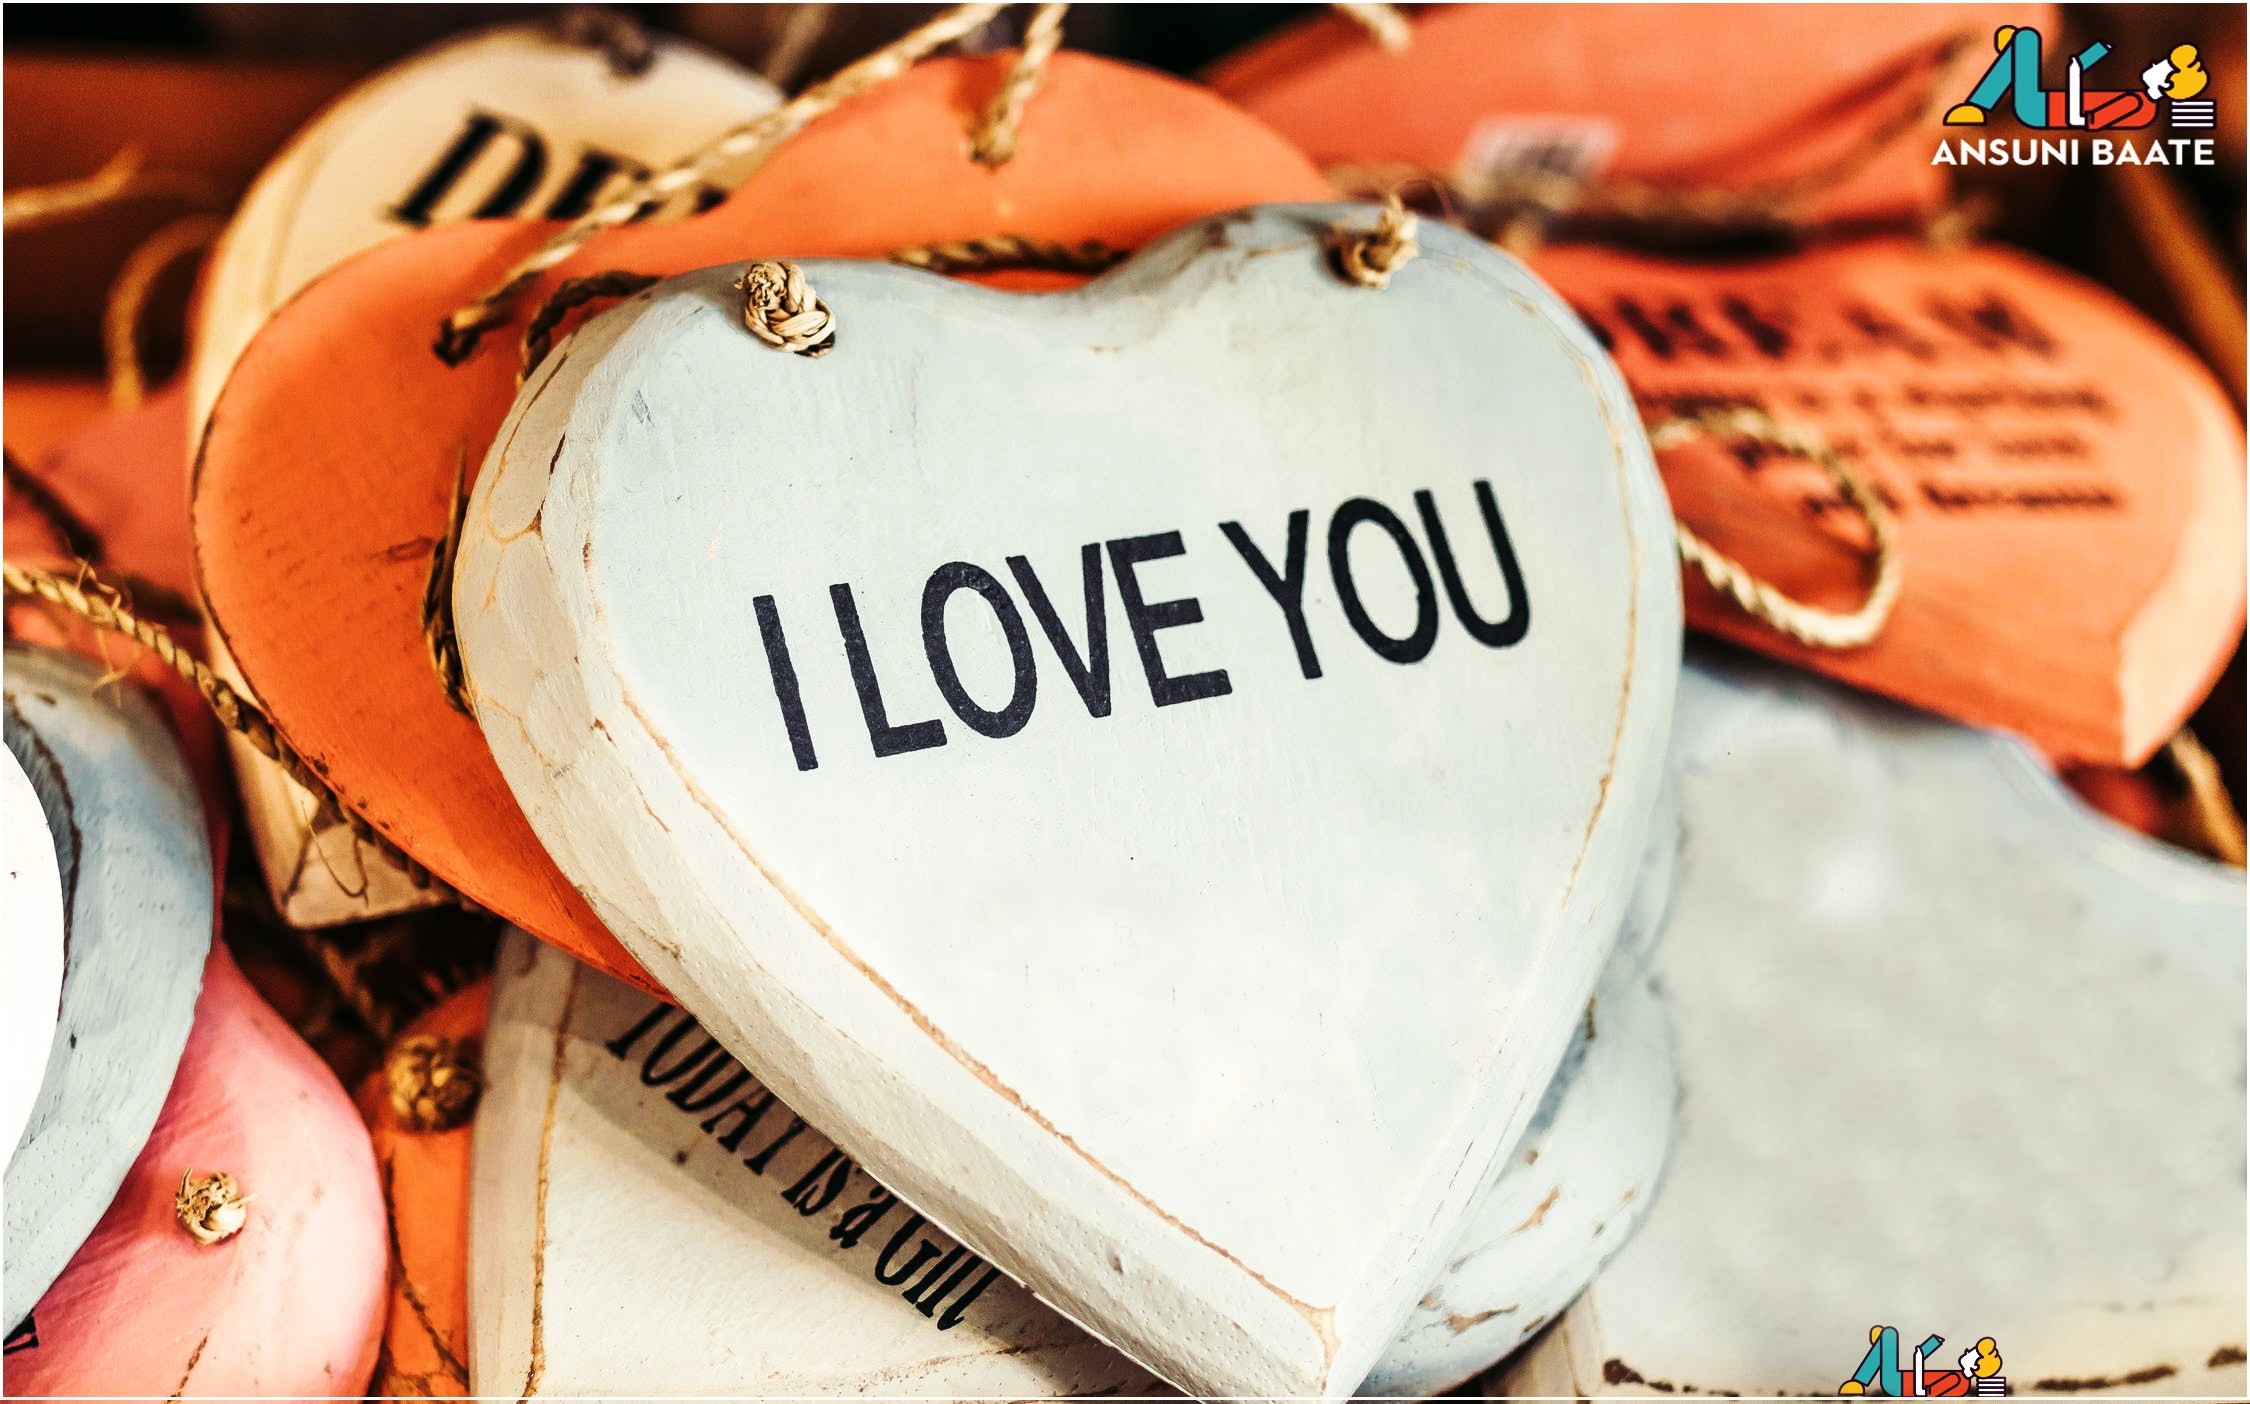 2250x1404 Romantic Love Wallpaper: Romantic Love Image Photo Download Romantic Love  Image Photo Download i love